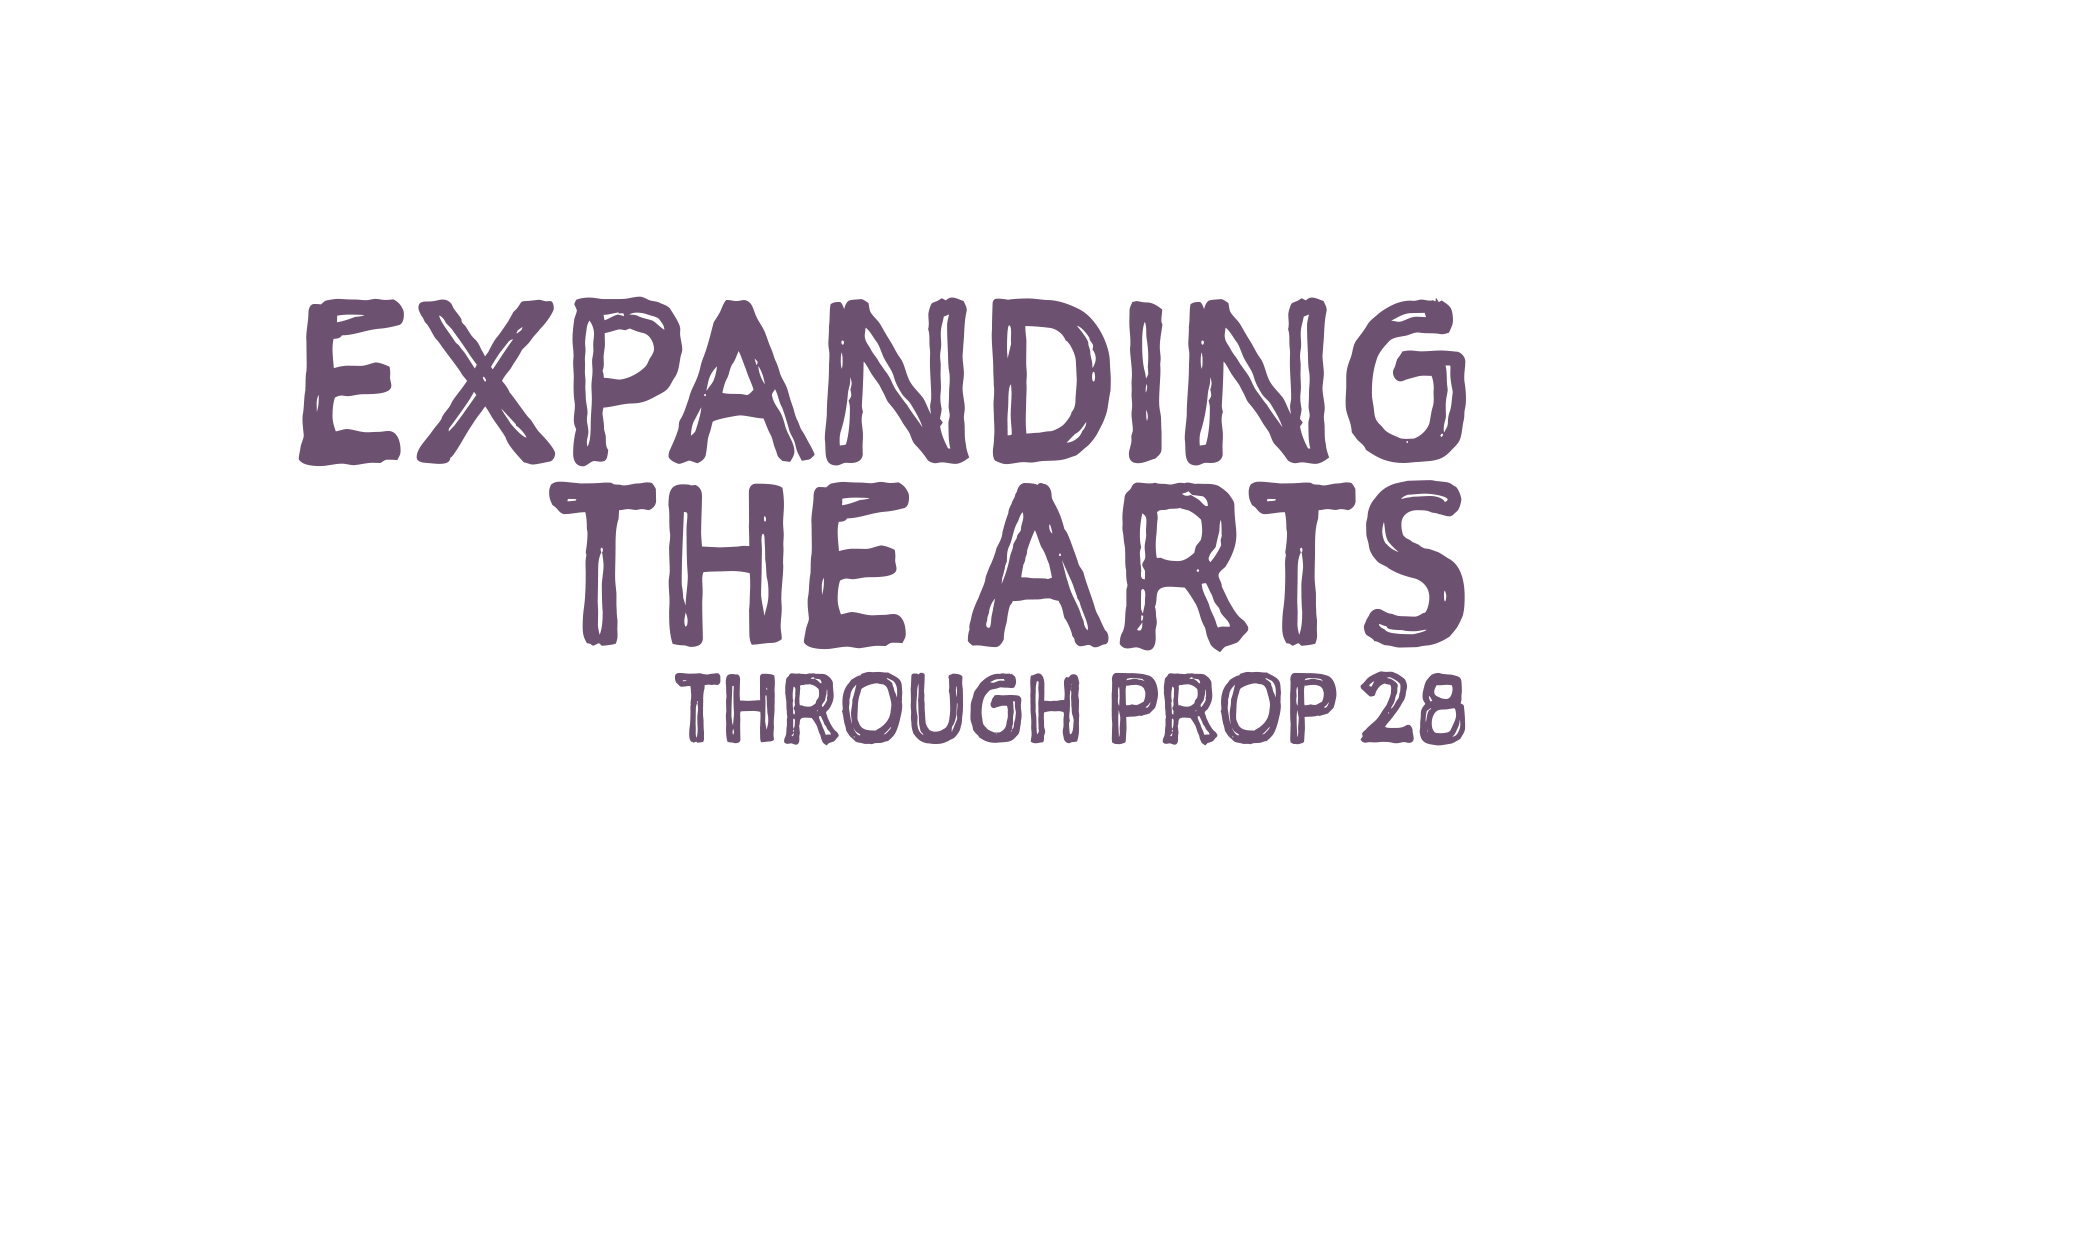 Expanding the Arts Through Prop 28